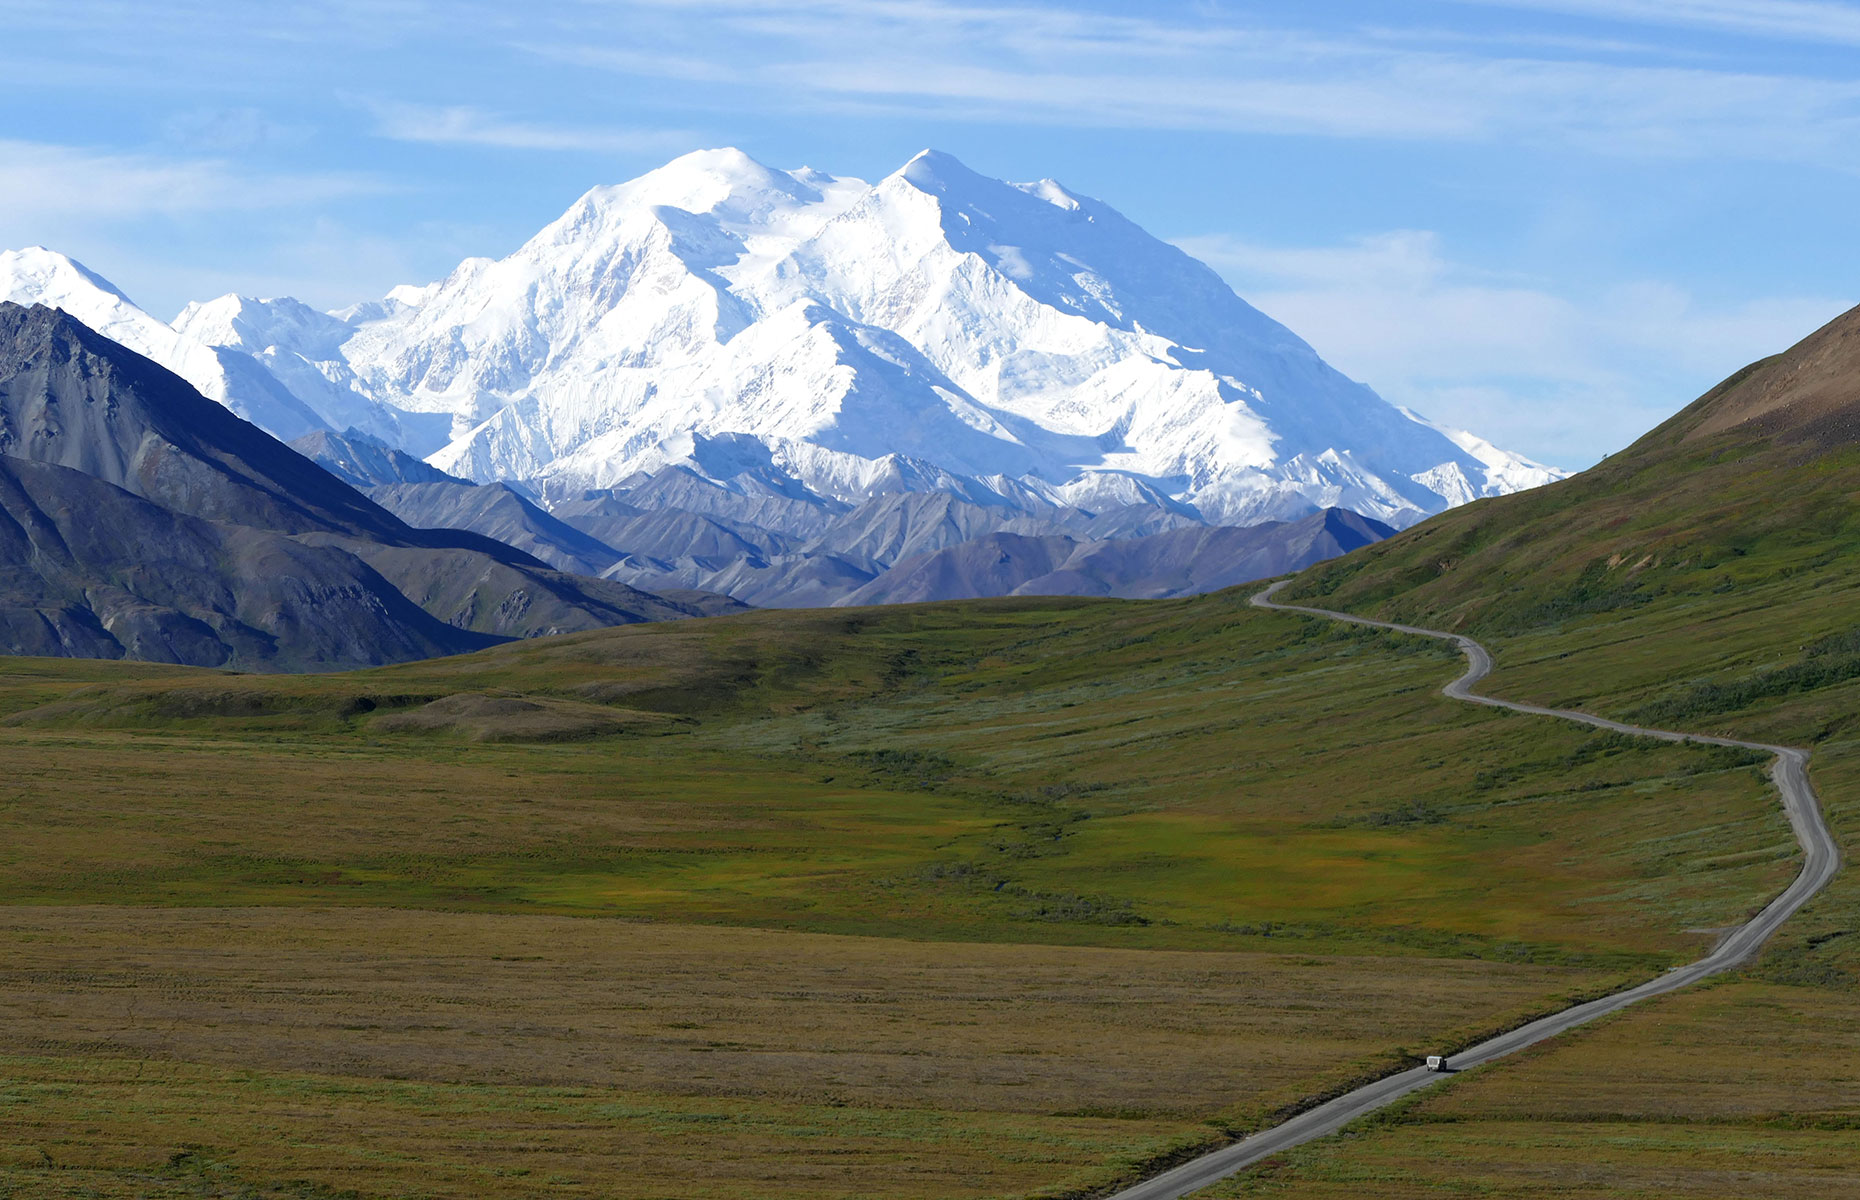 Mount Denali, Alaska, is North America's highest mountain